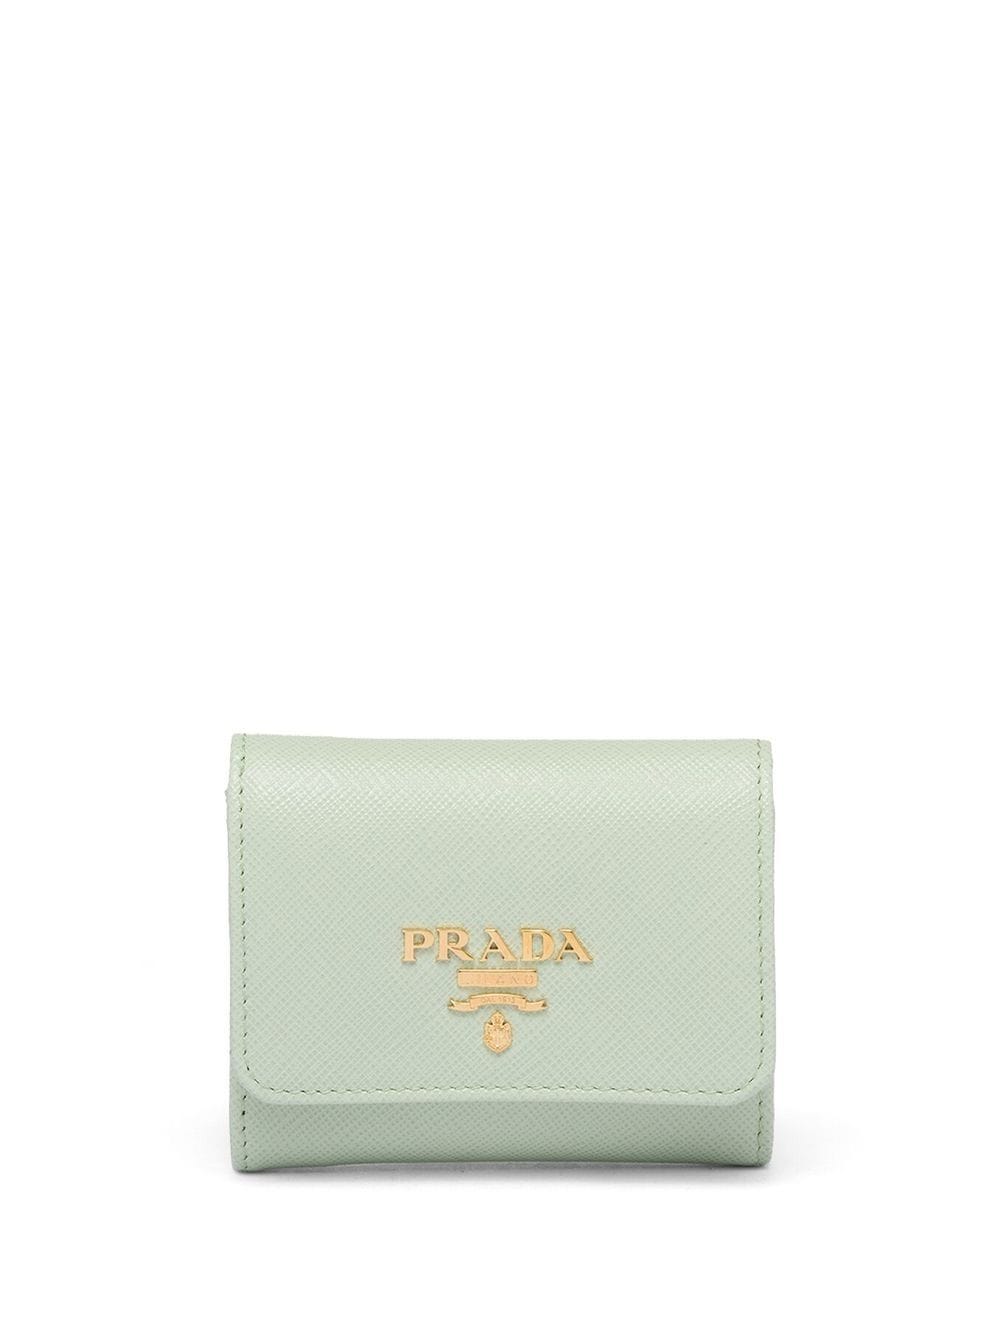 Prada leather logo-detail wallet - Green von Prada